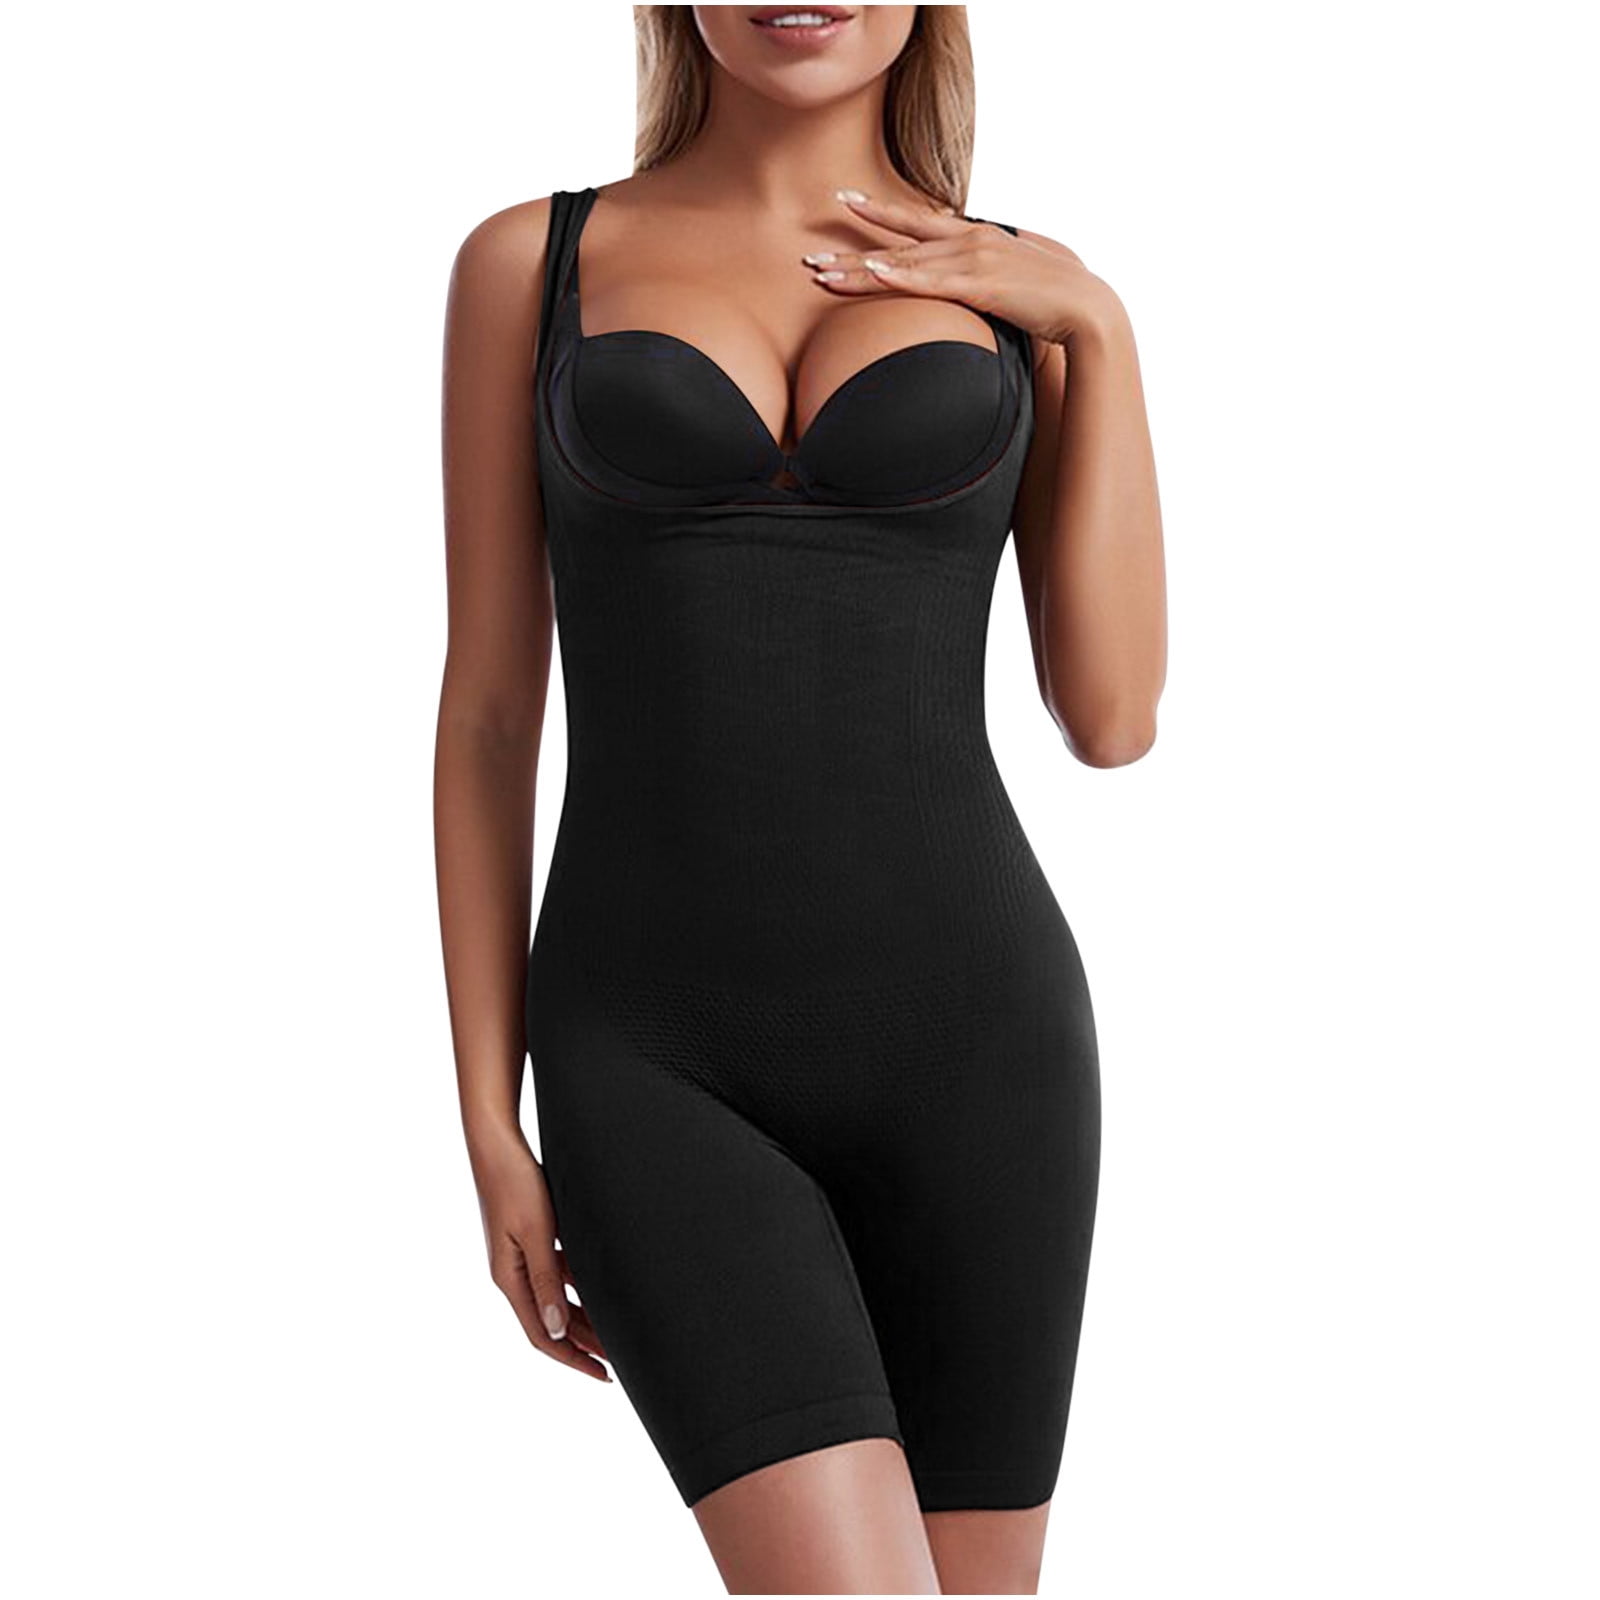 LITTLEMISSY Bodysuit for Women Tummy Control Shapewear Seamless